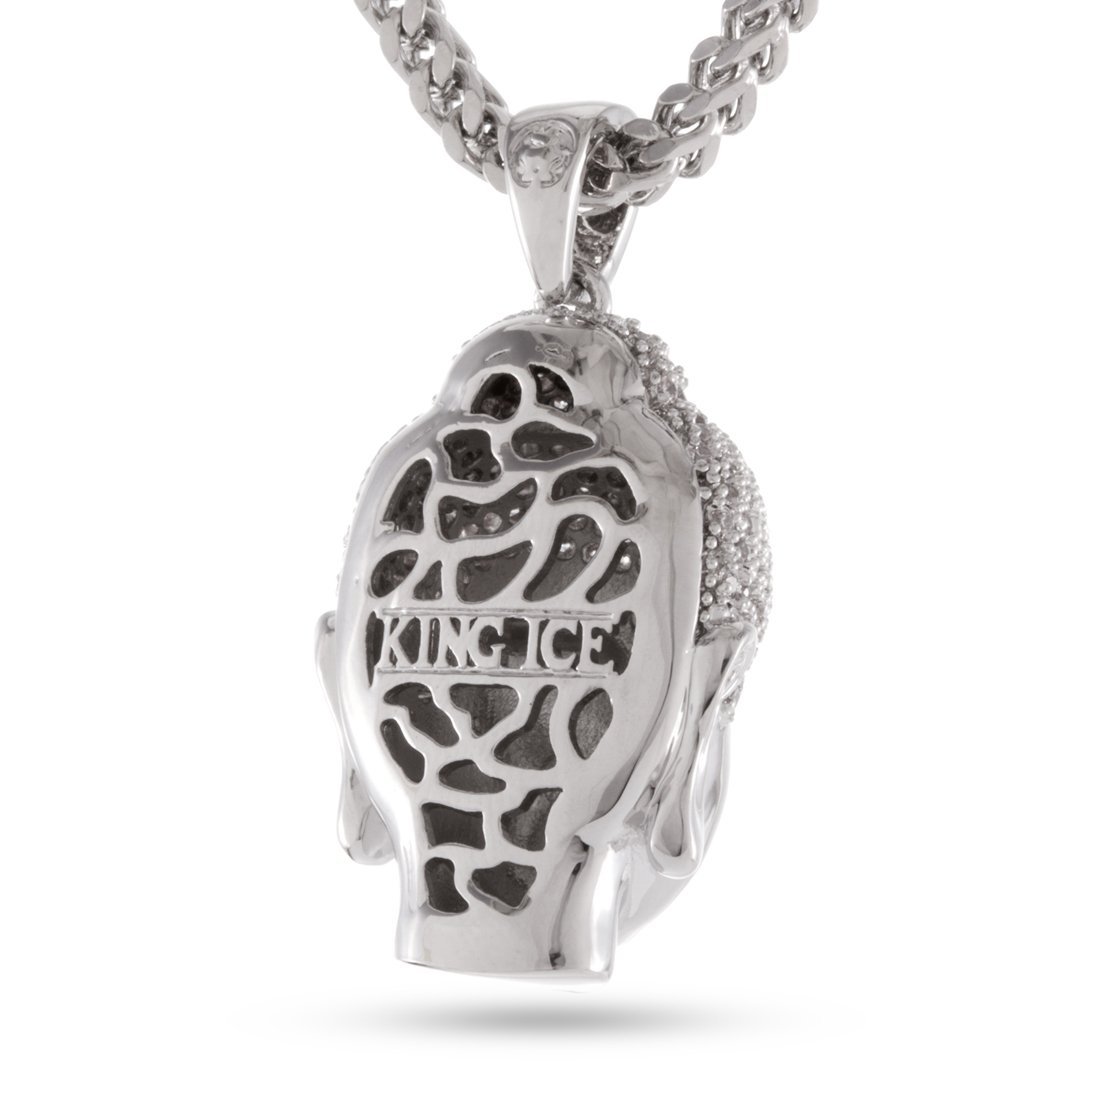 Necklace | Far East Mini Ice | King Buddha Jewelry Polished